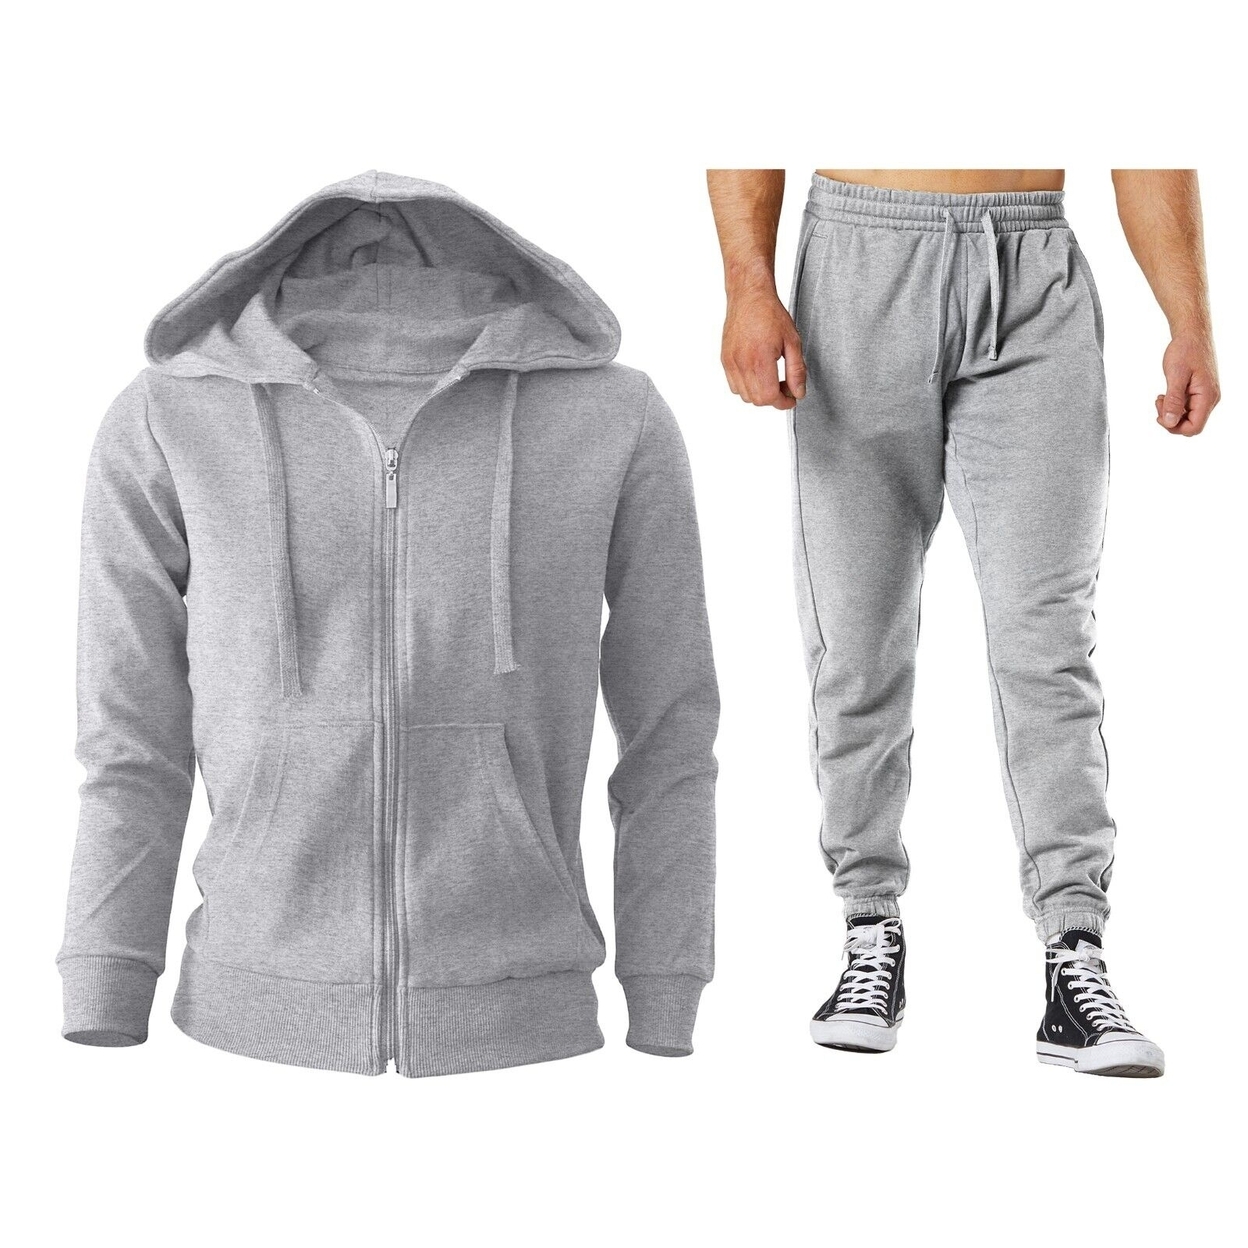 2-Piece: Men's Winter Warm Cozy Athletic Multi-Pockets BIG & TALL Sweatsuit Set - Grey, Xx-large